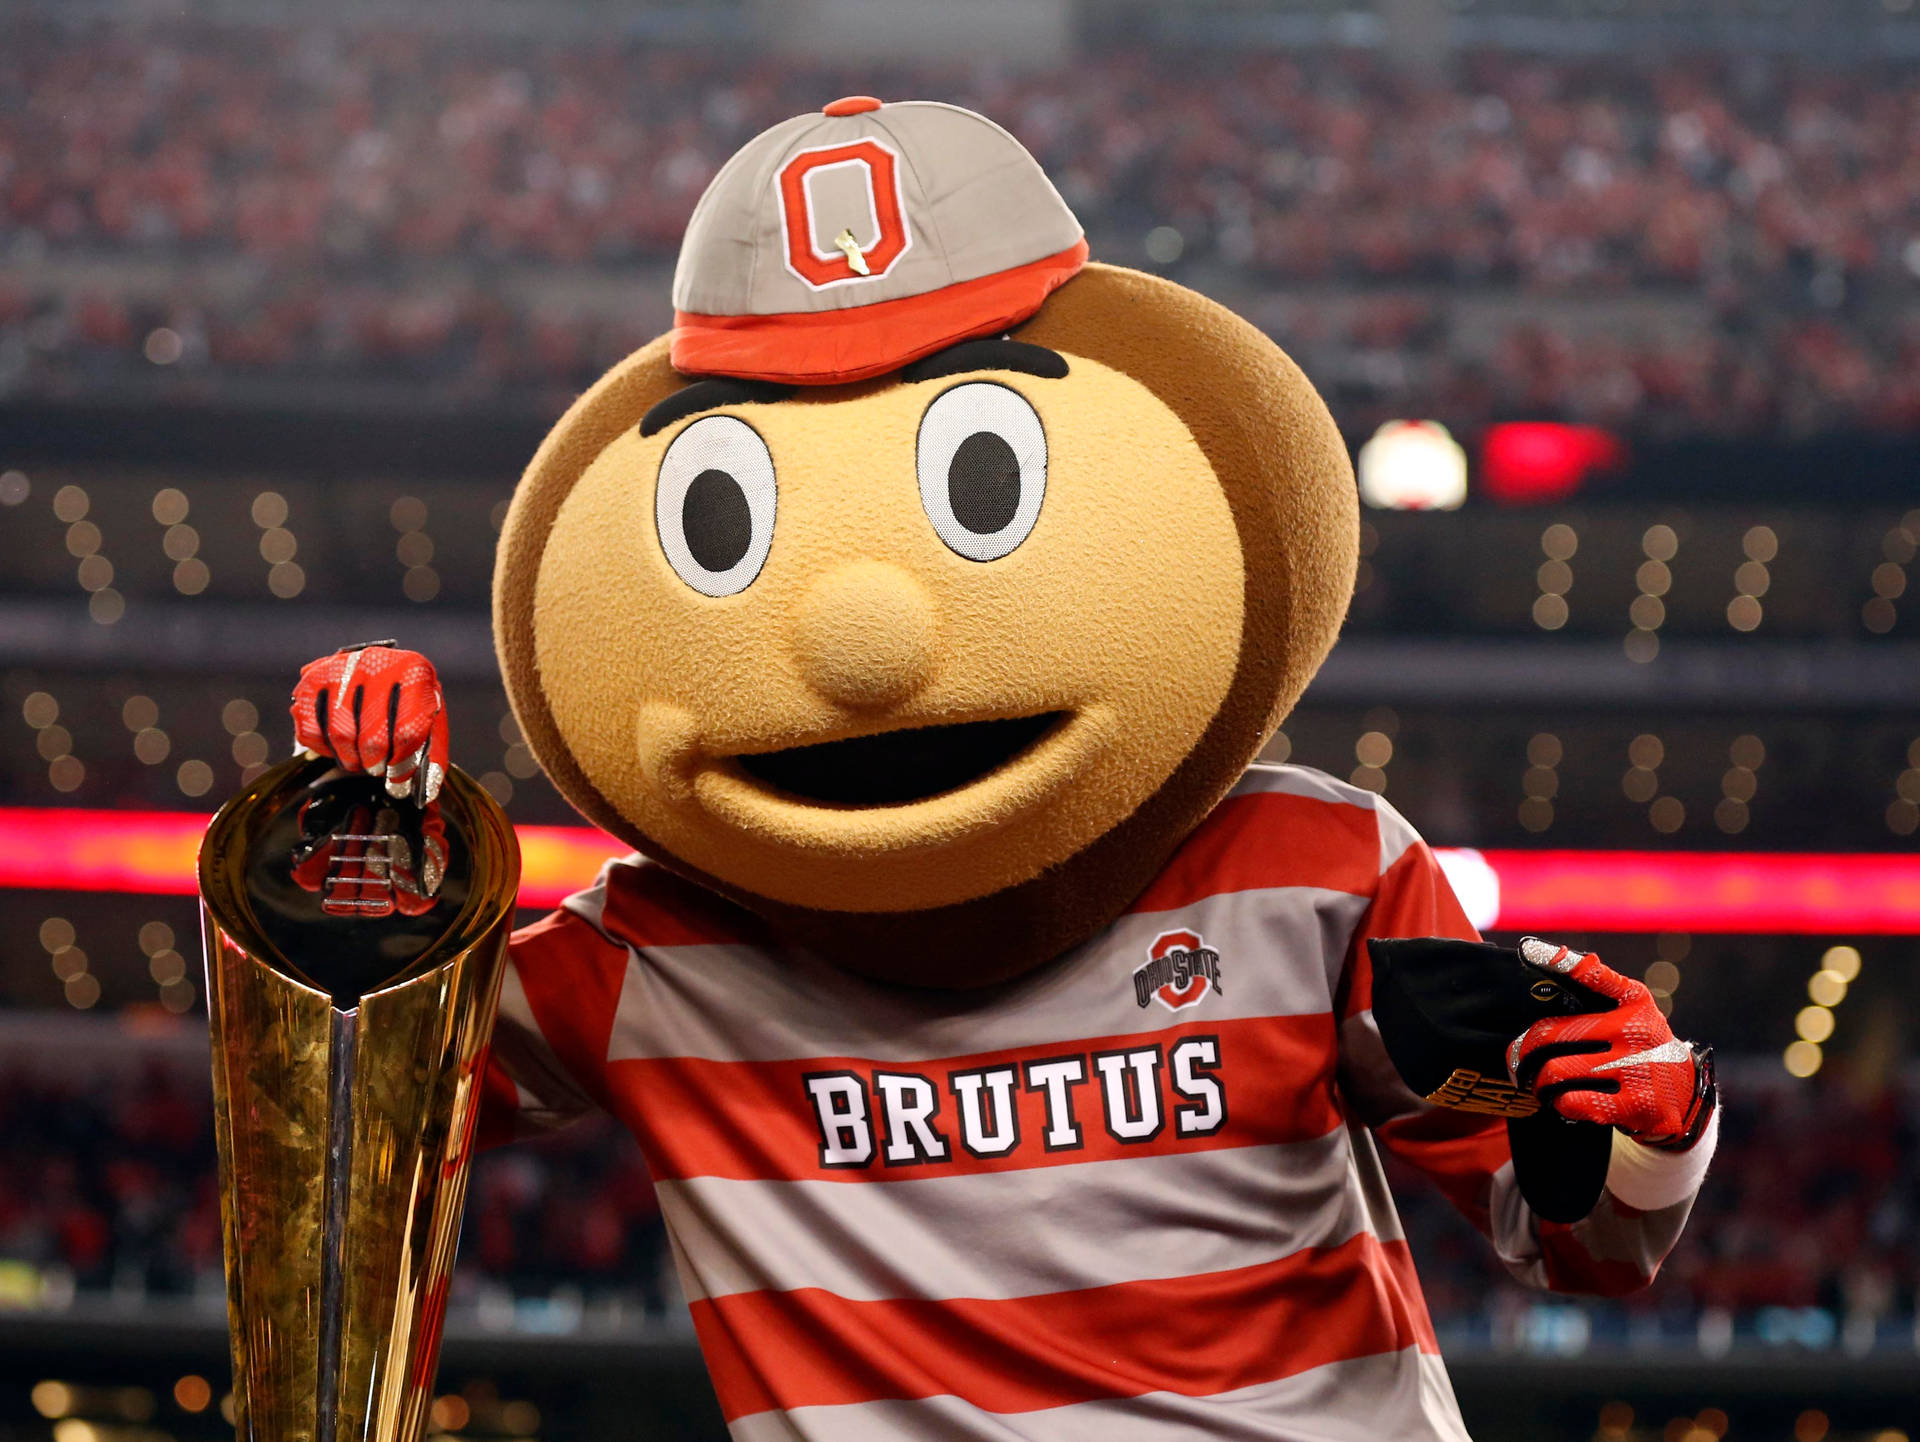 College Football Brutus Mascot Picture